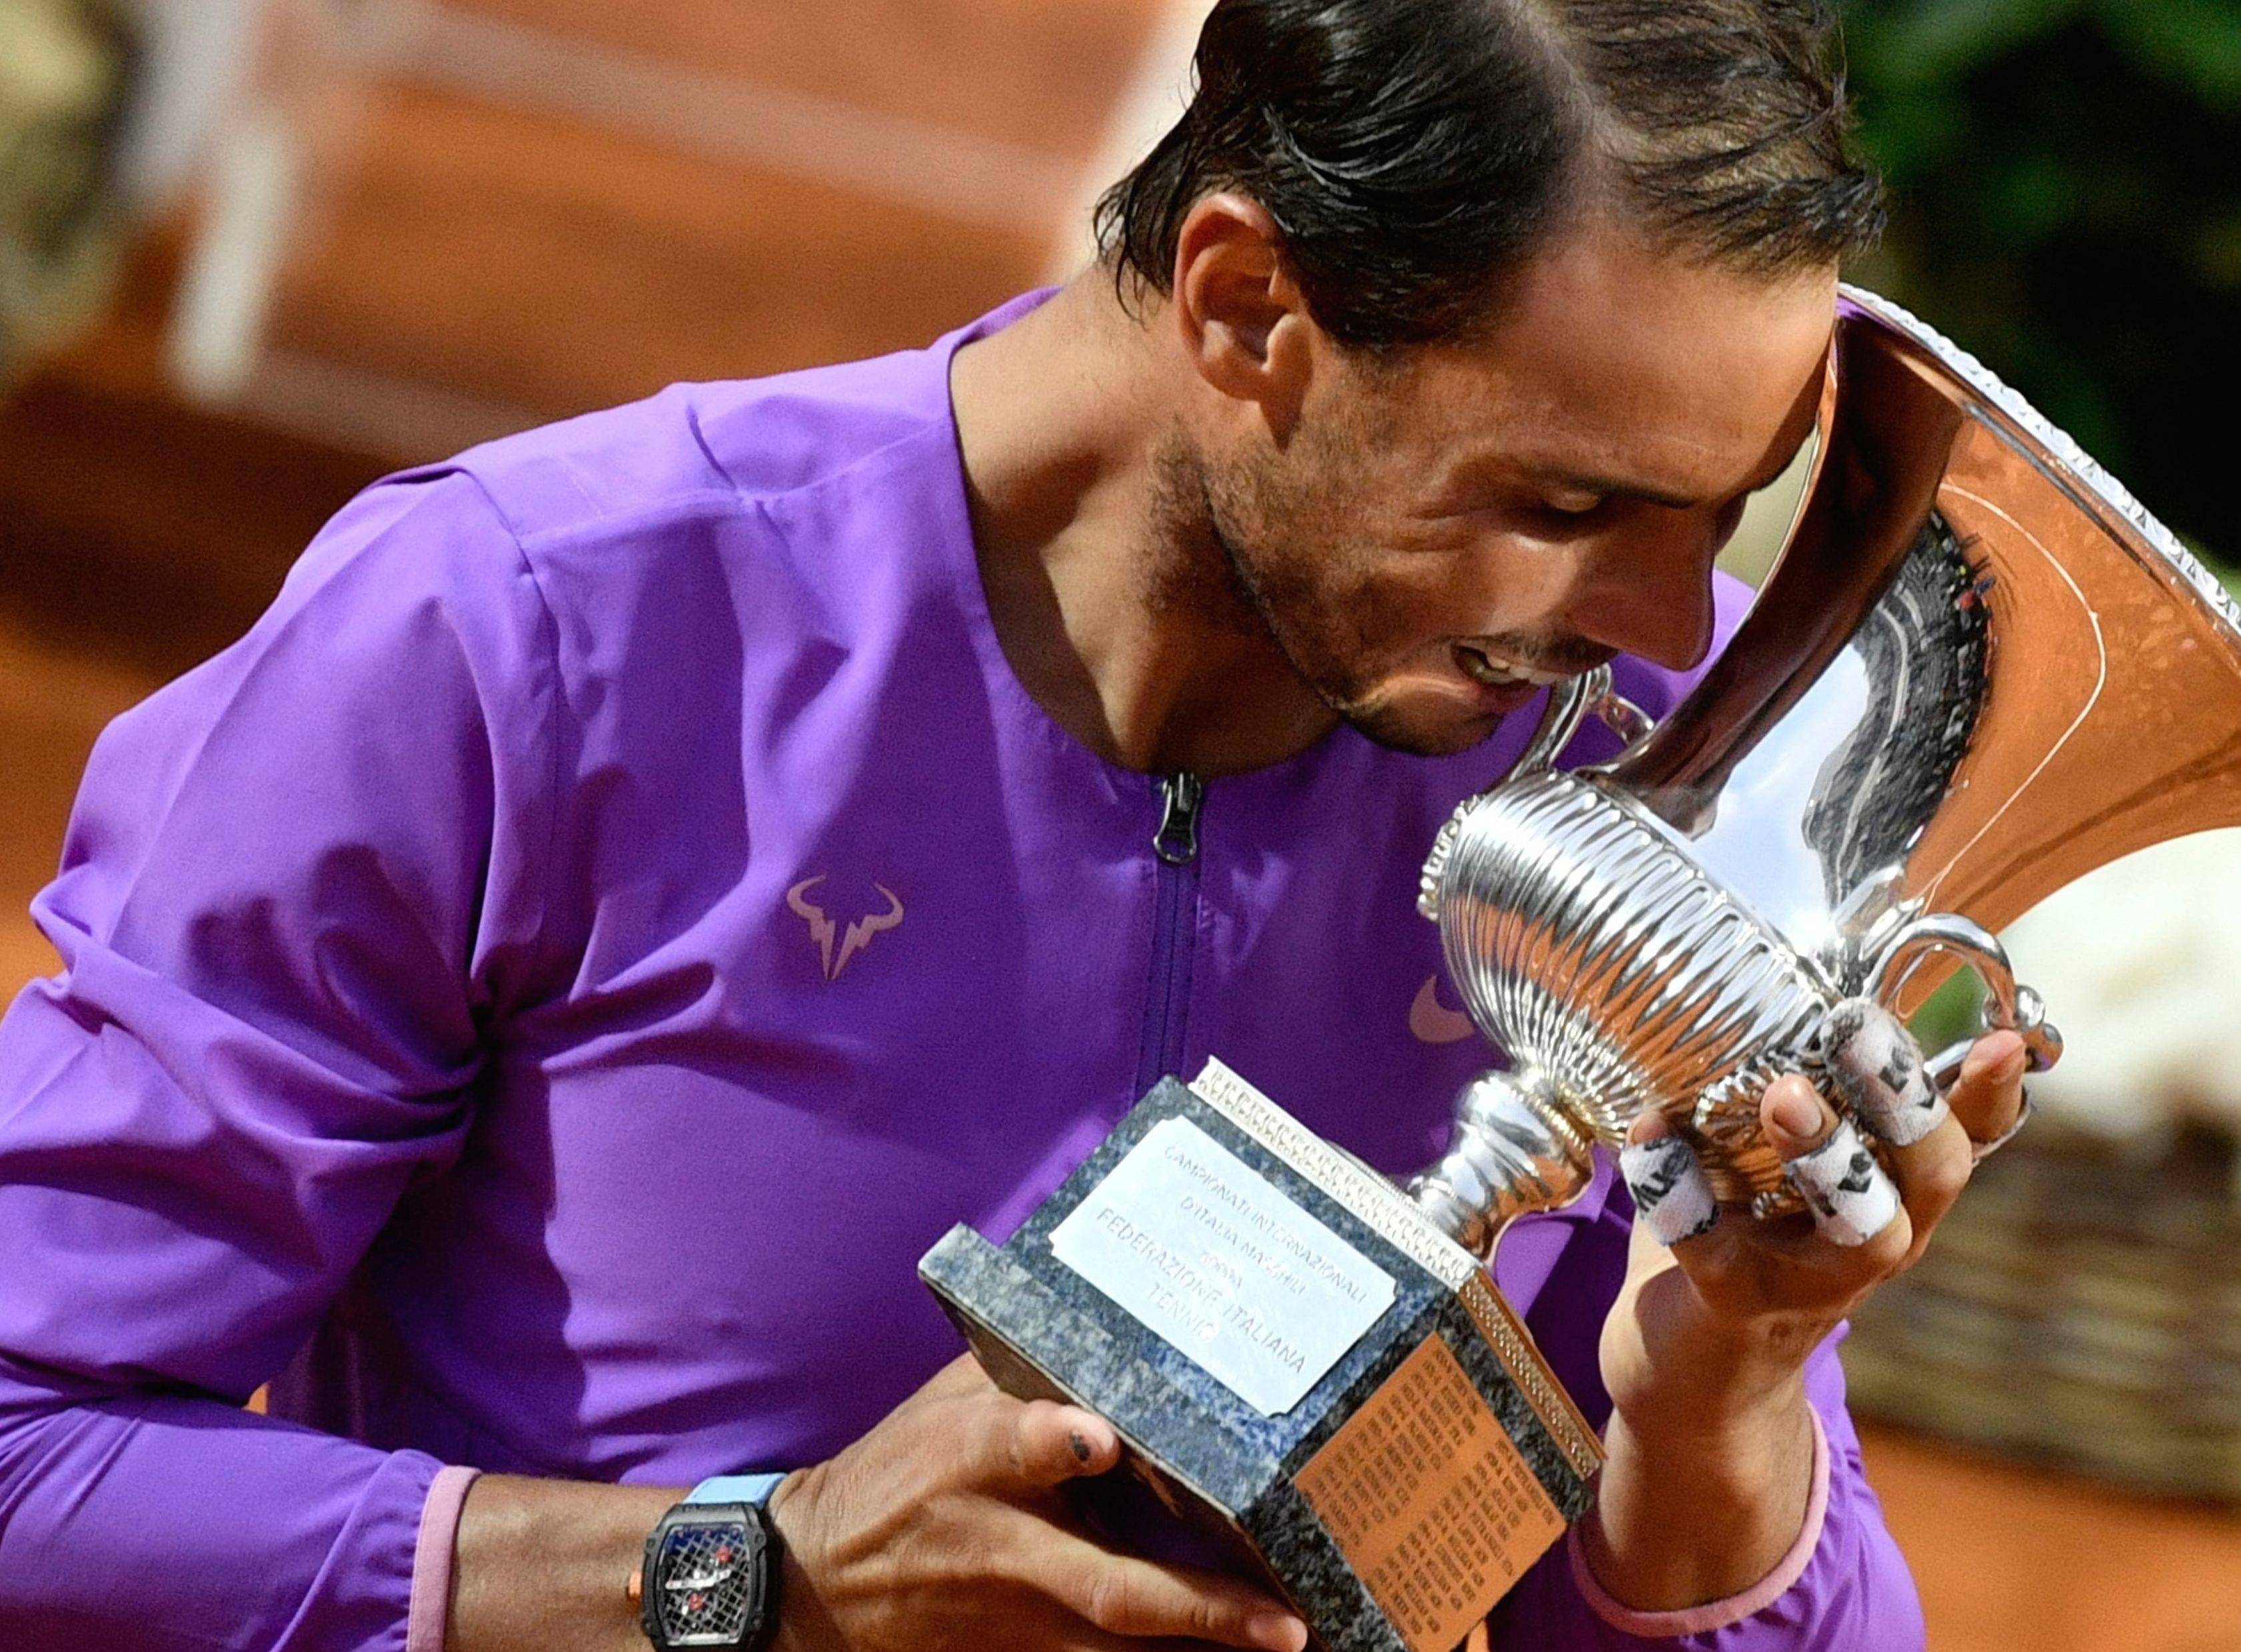 Rafael Nadal beat Deyo to win the Rome Masters